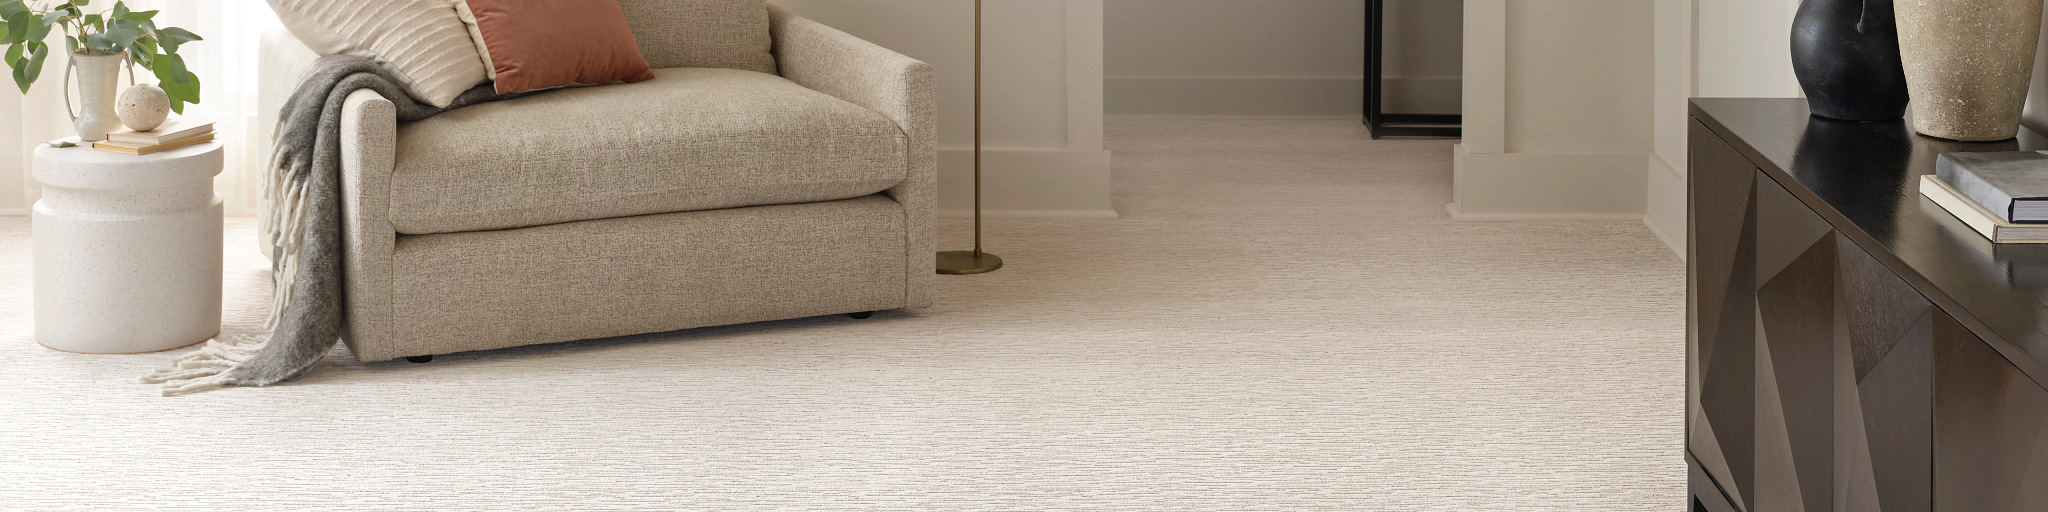 Carpet-Anderson-Tuftex-ZZ242-PurrfectMatch-00553-Living-Room-2021